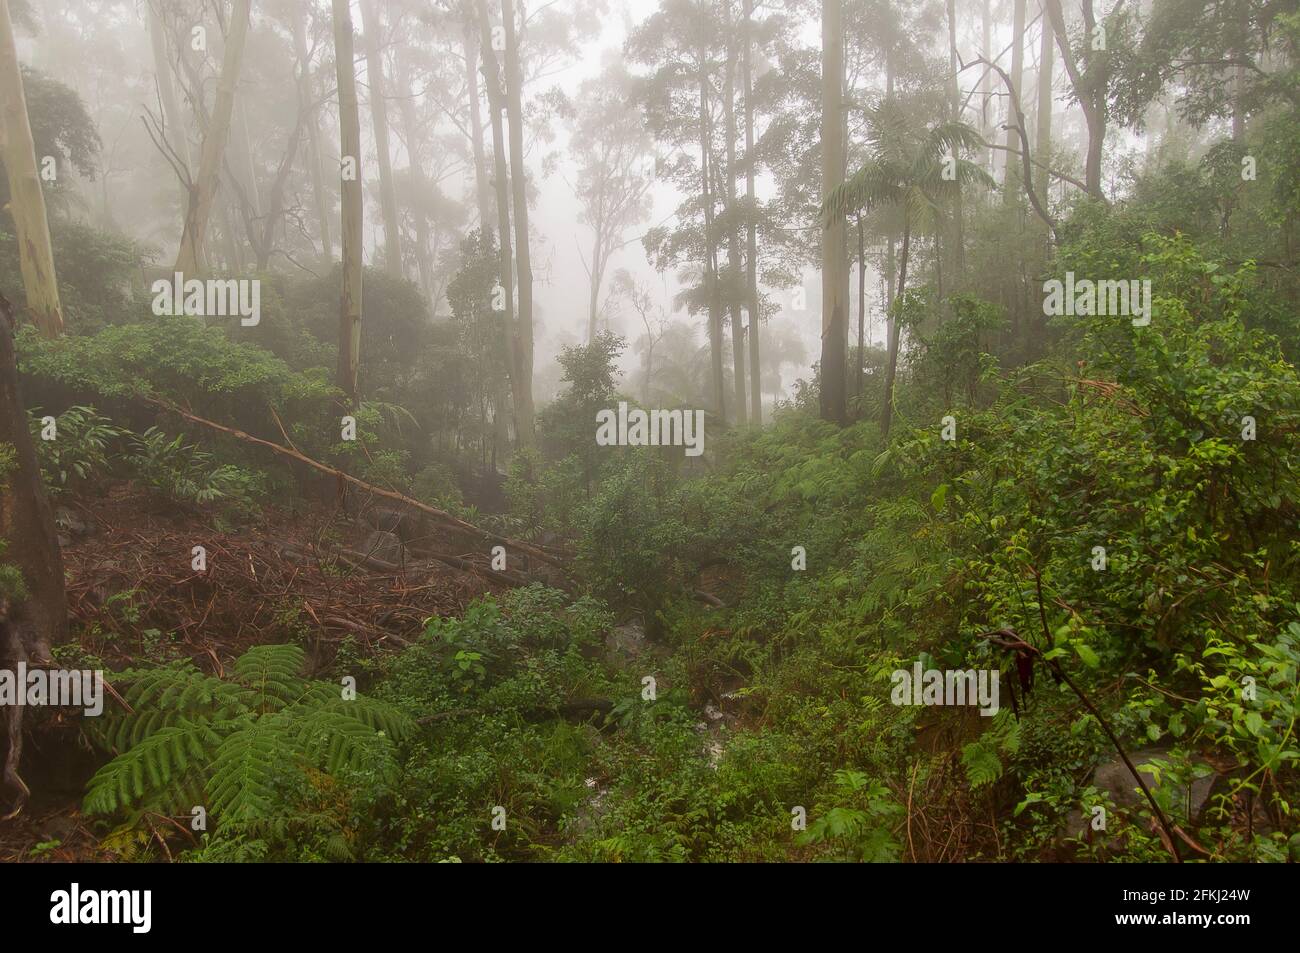 Gully full of gum trees, ferns, palms in Australian lowland subtropical rainforest during wet and misty summer weather. Tamborine Mountain, Australia Stock Photo